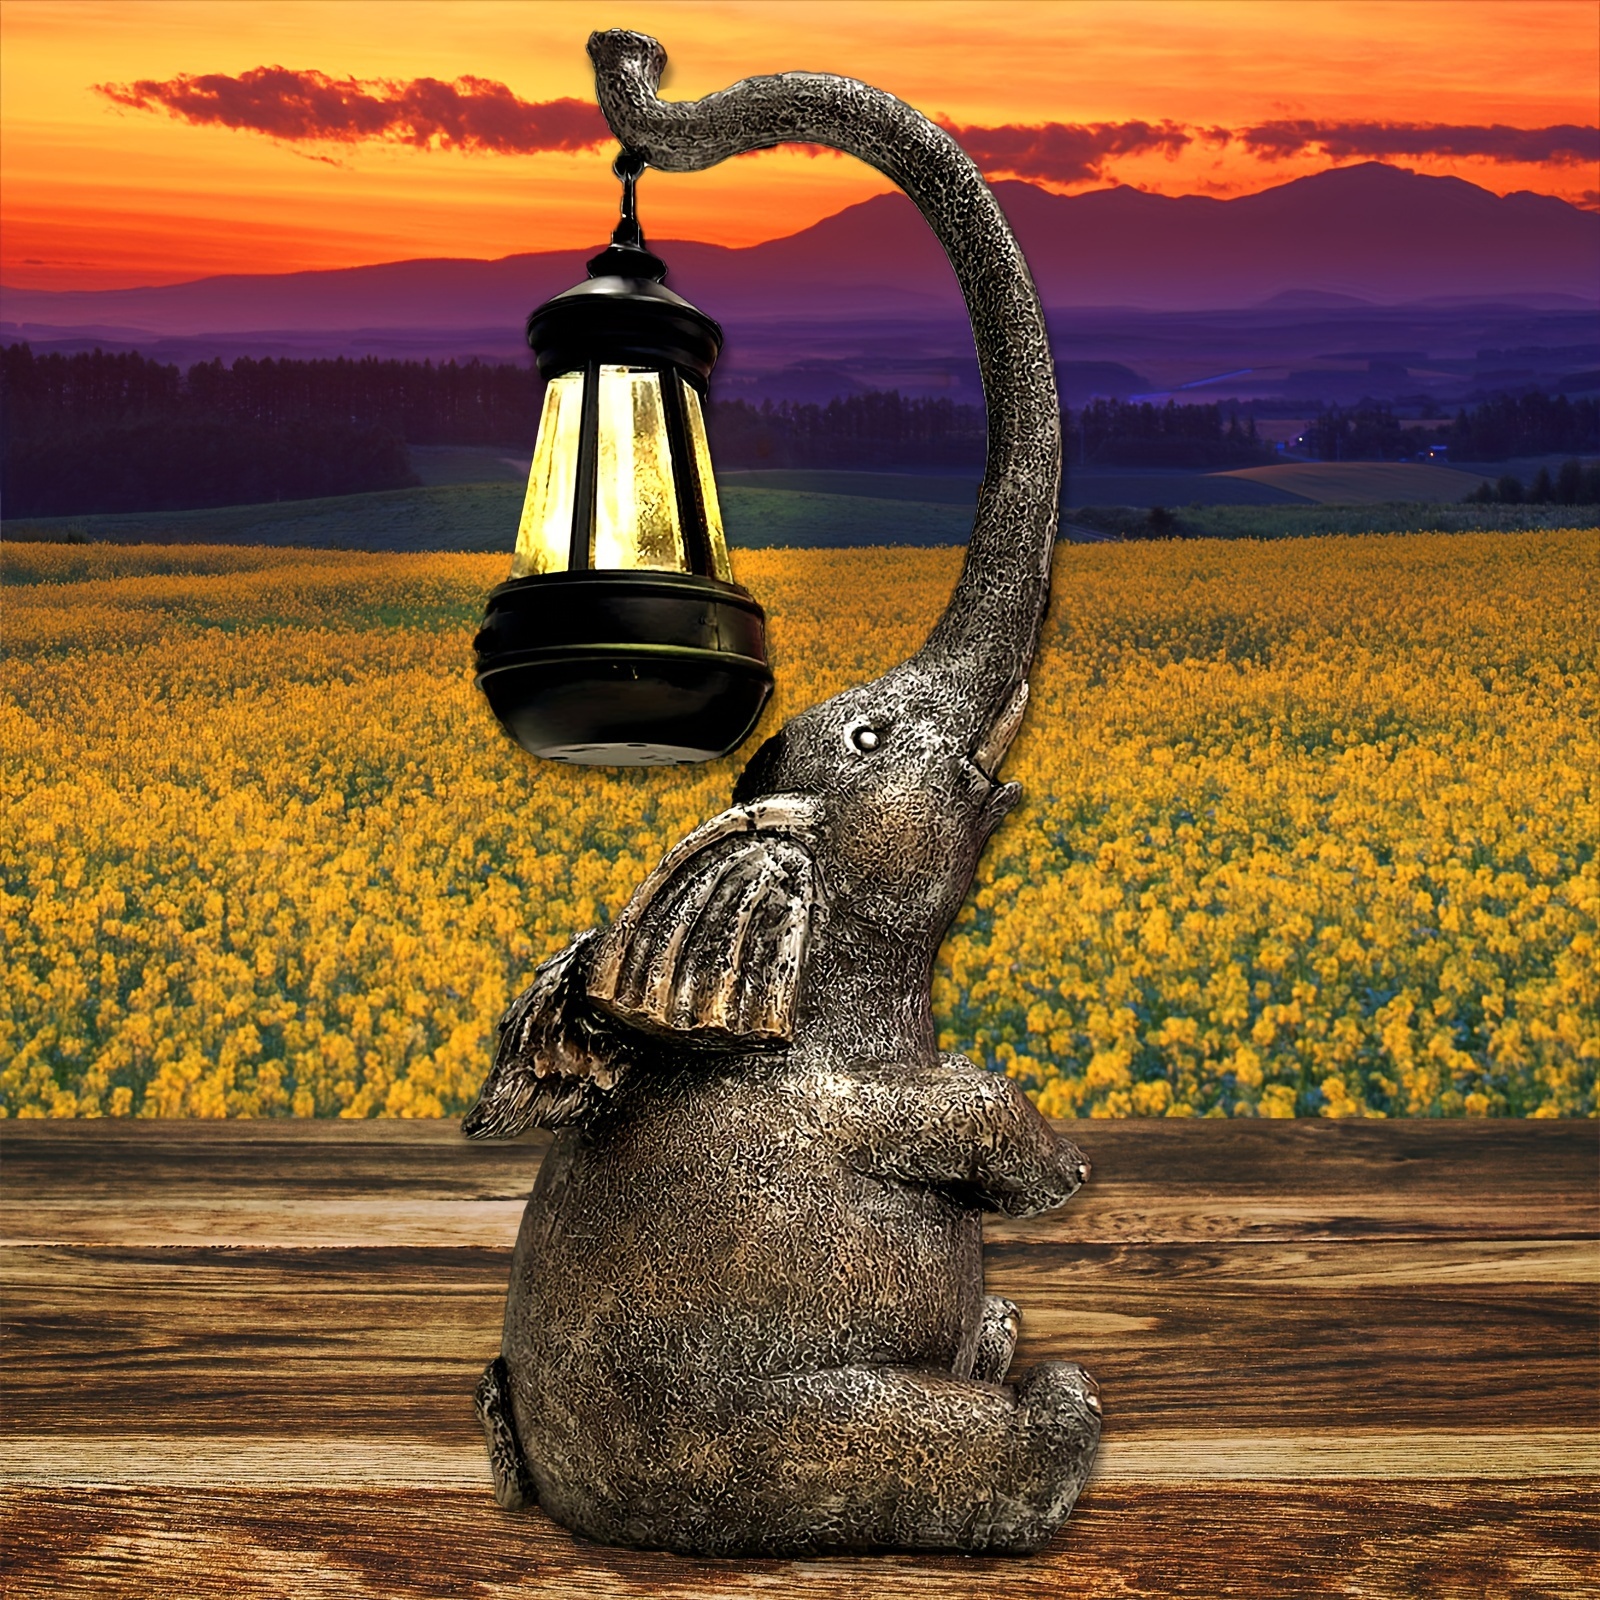 

1pc Solar-powered Garden Statue, Antique Bronze Elephant Sculpture With Solar Light Sensor, Resin Elephant For Garden Decor, Artistic Lawn Ornament, Outdoor Landscape Decoration